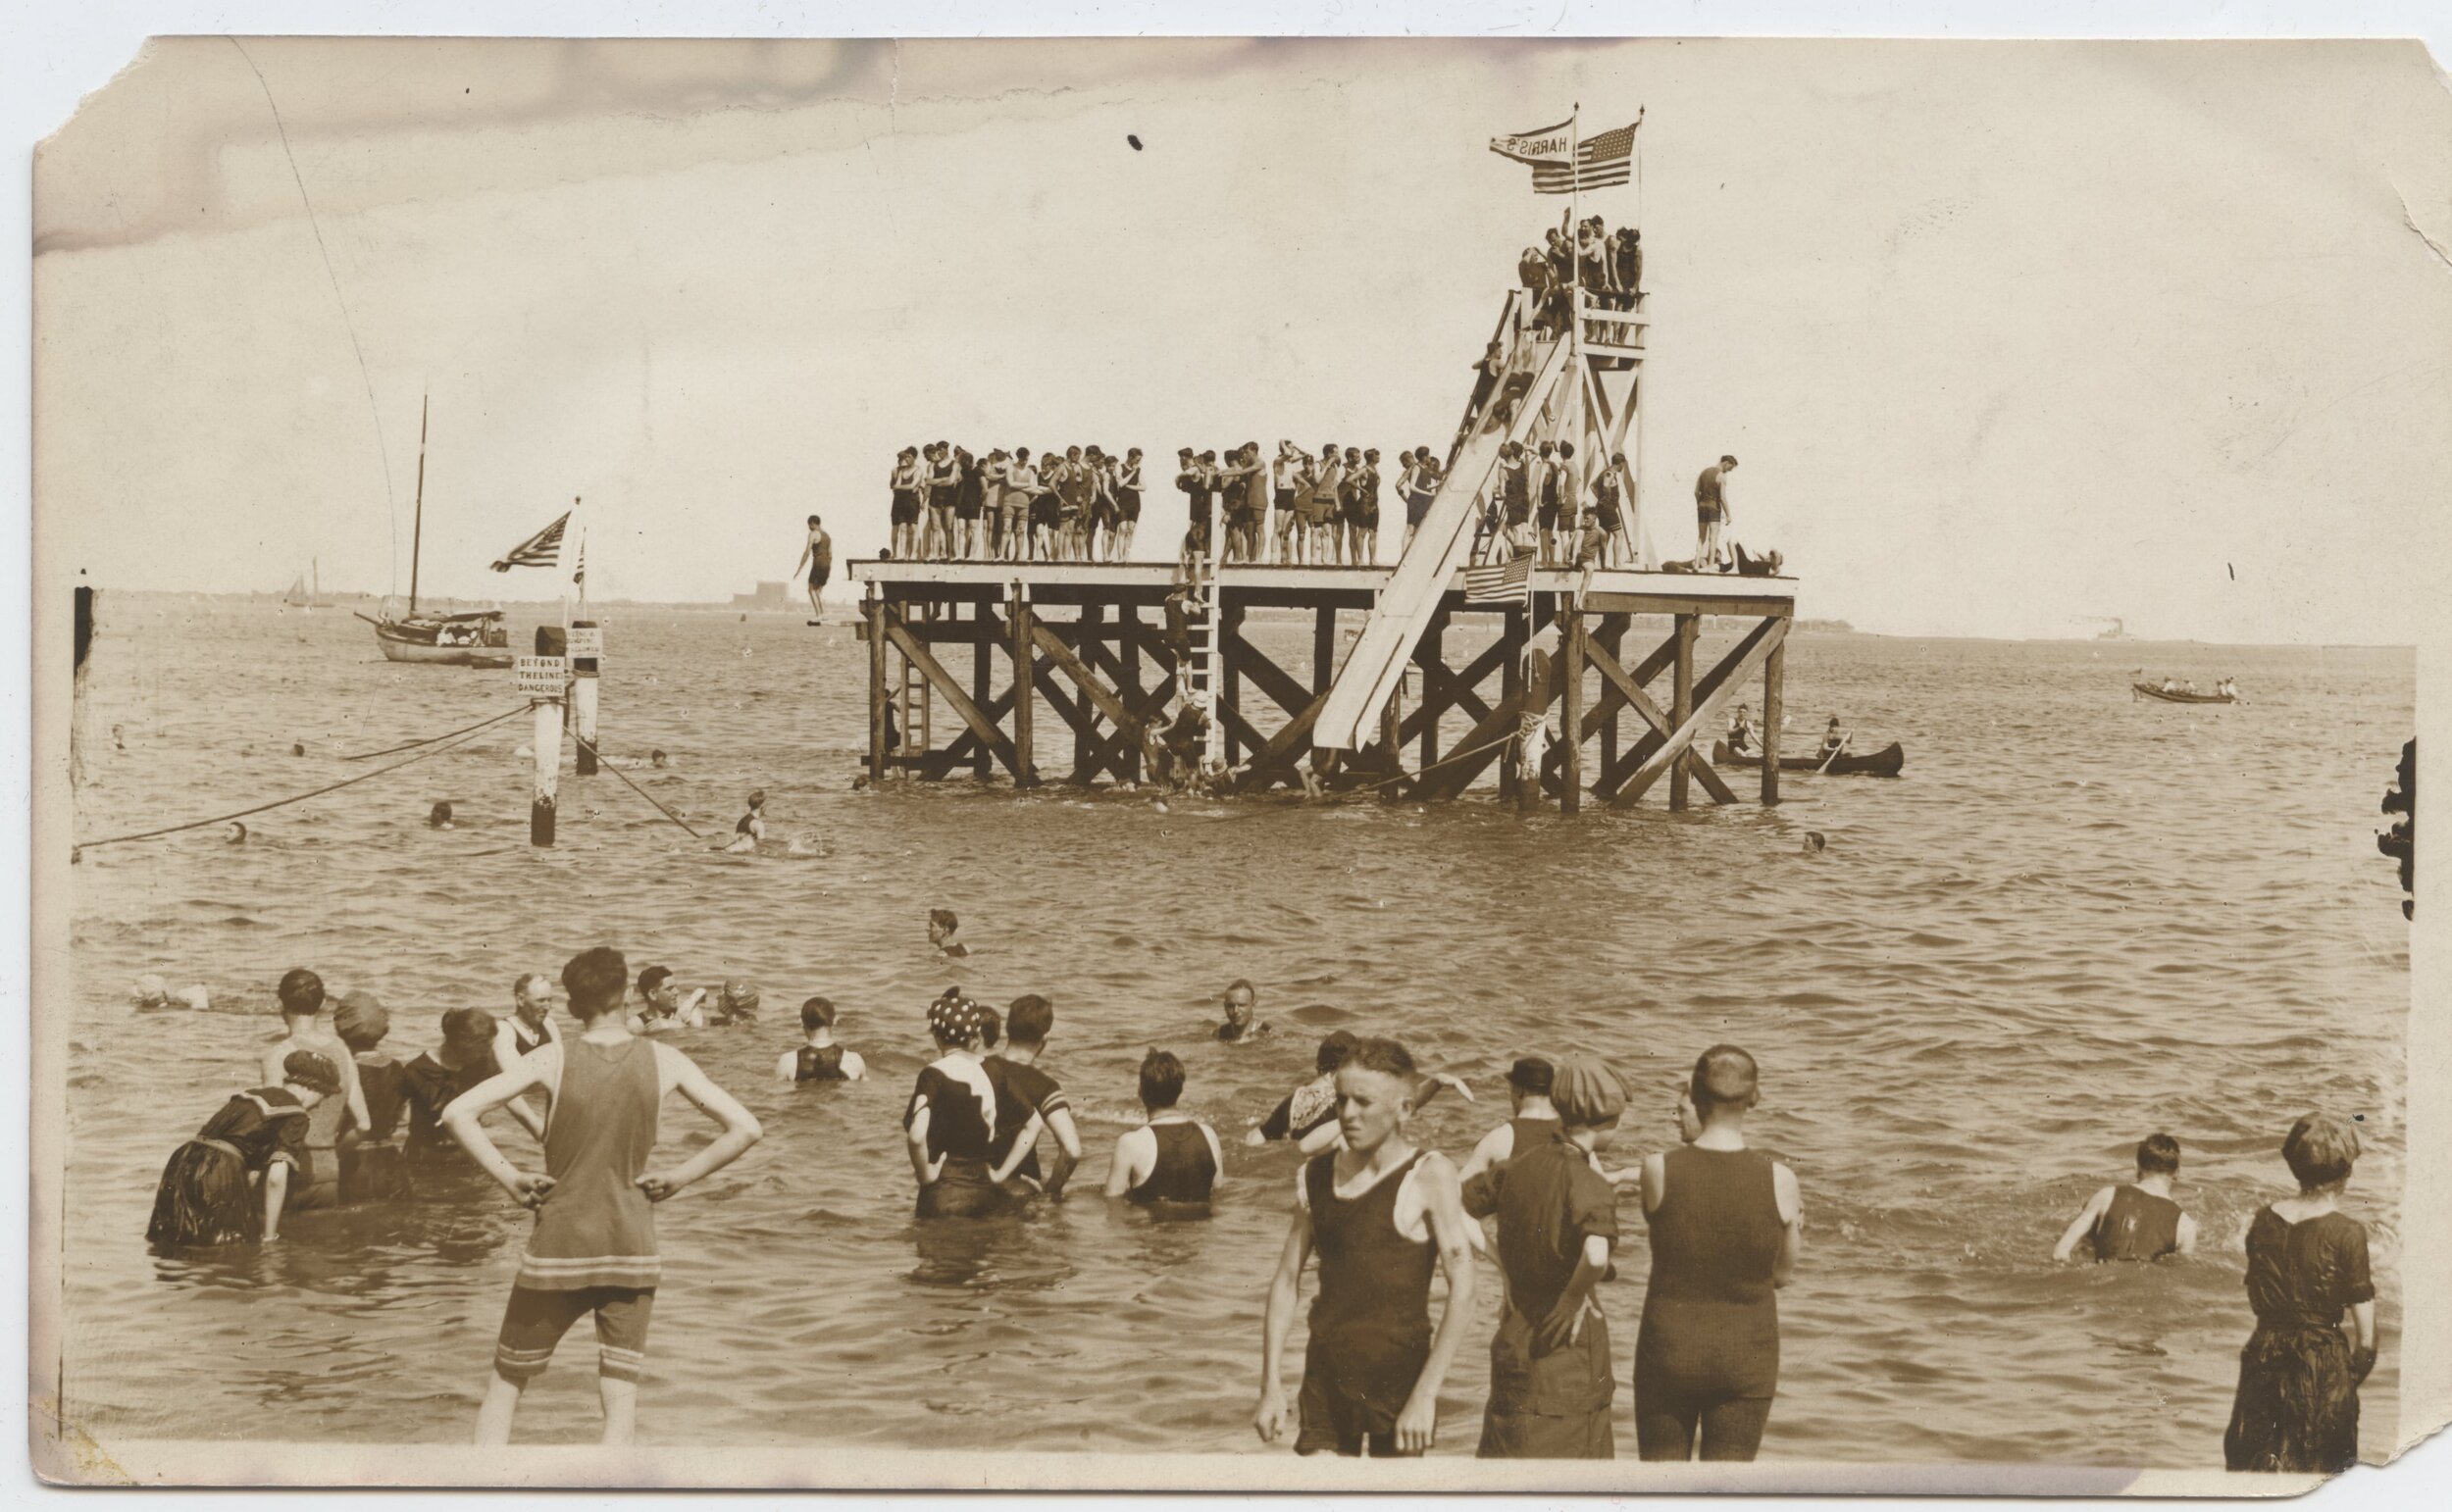  Water slide at South Beach, Staten Island, ca. 1905-1915. 